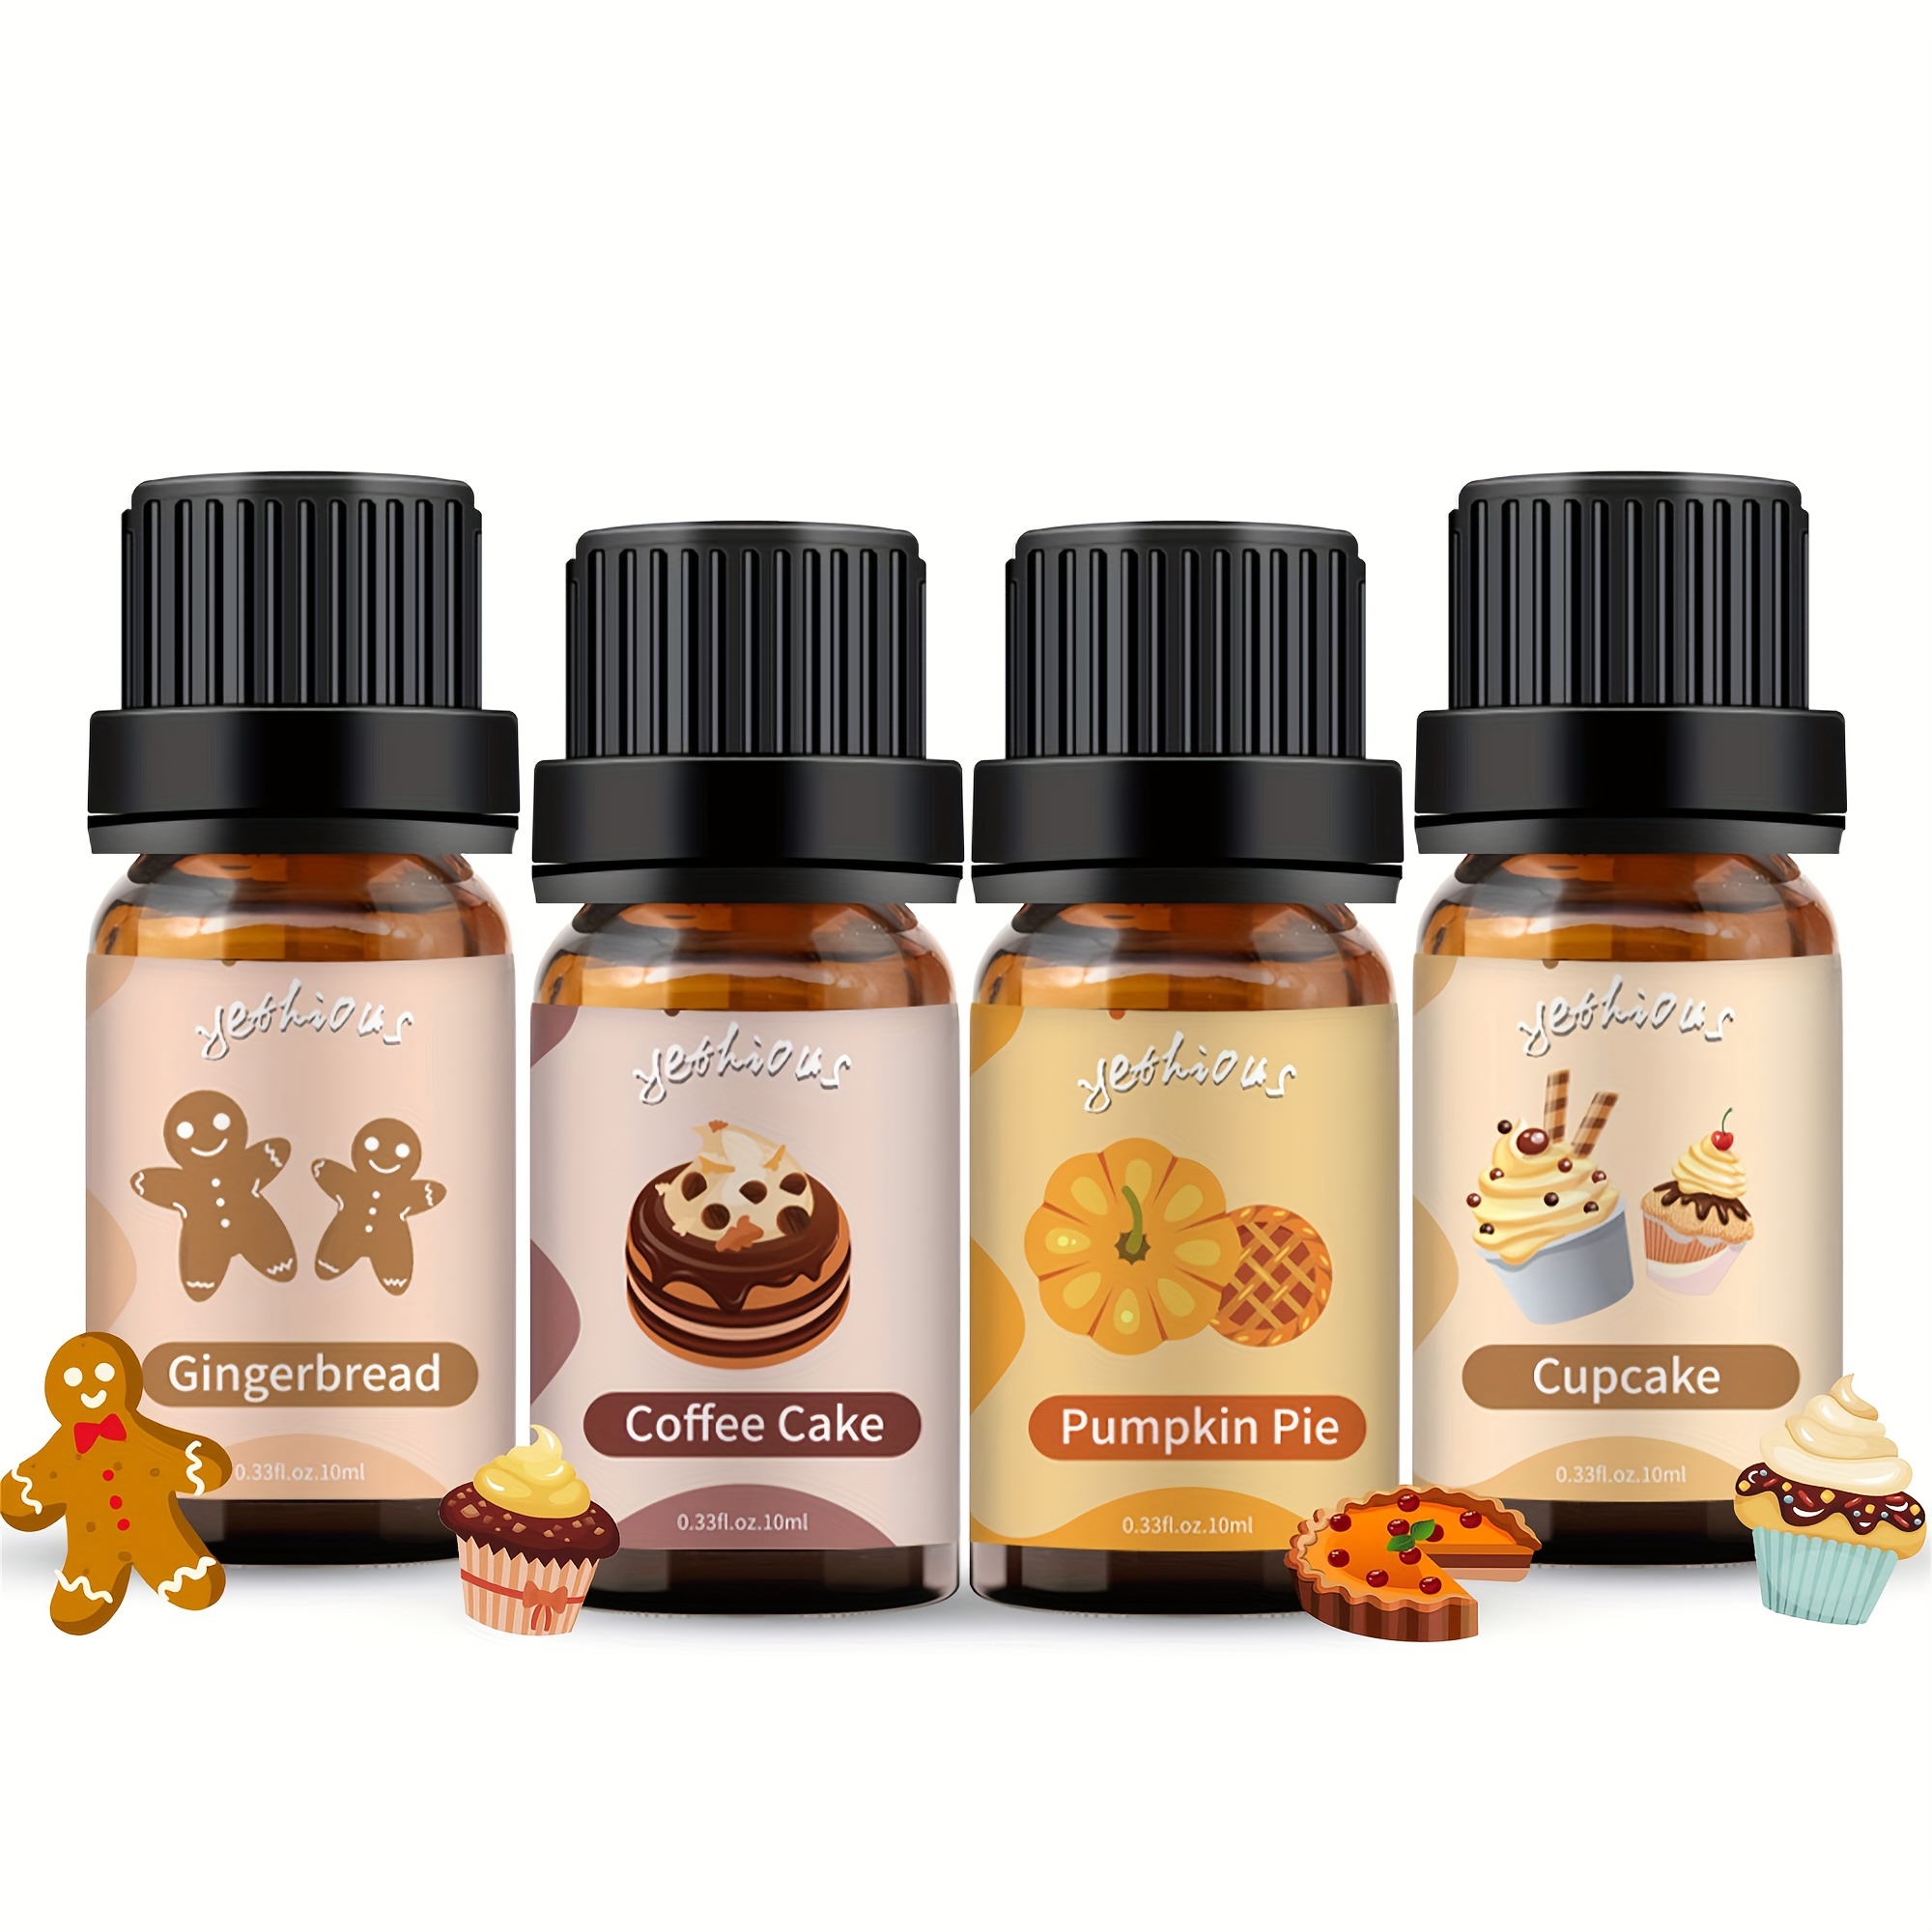 P&j Trading Spice Set of 6 Premium Grade Fragrance Oils - Cinnamon Harvest Spice Apple Cider Coffee Cake Gingerbread Pumpkin Pie - 10ml